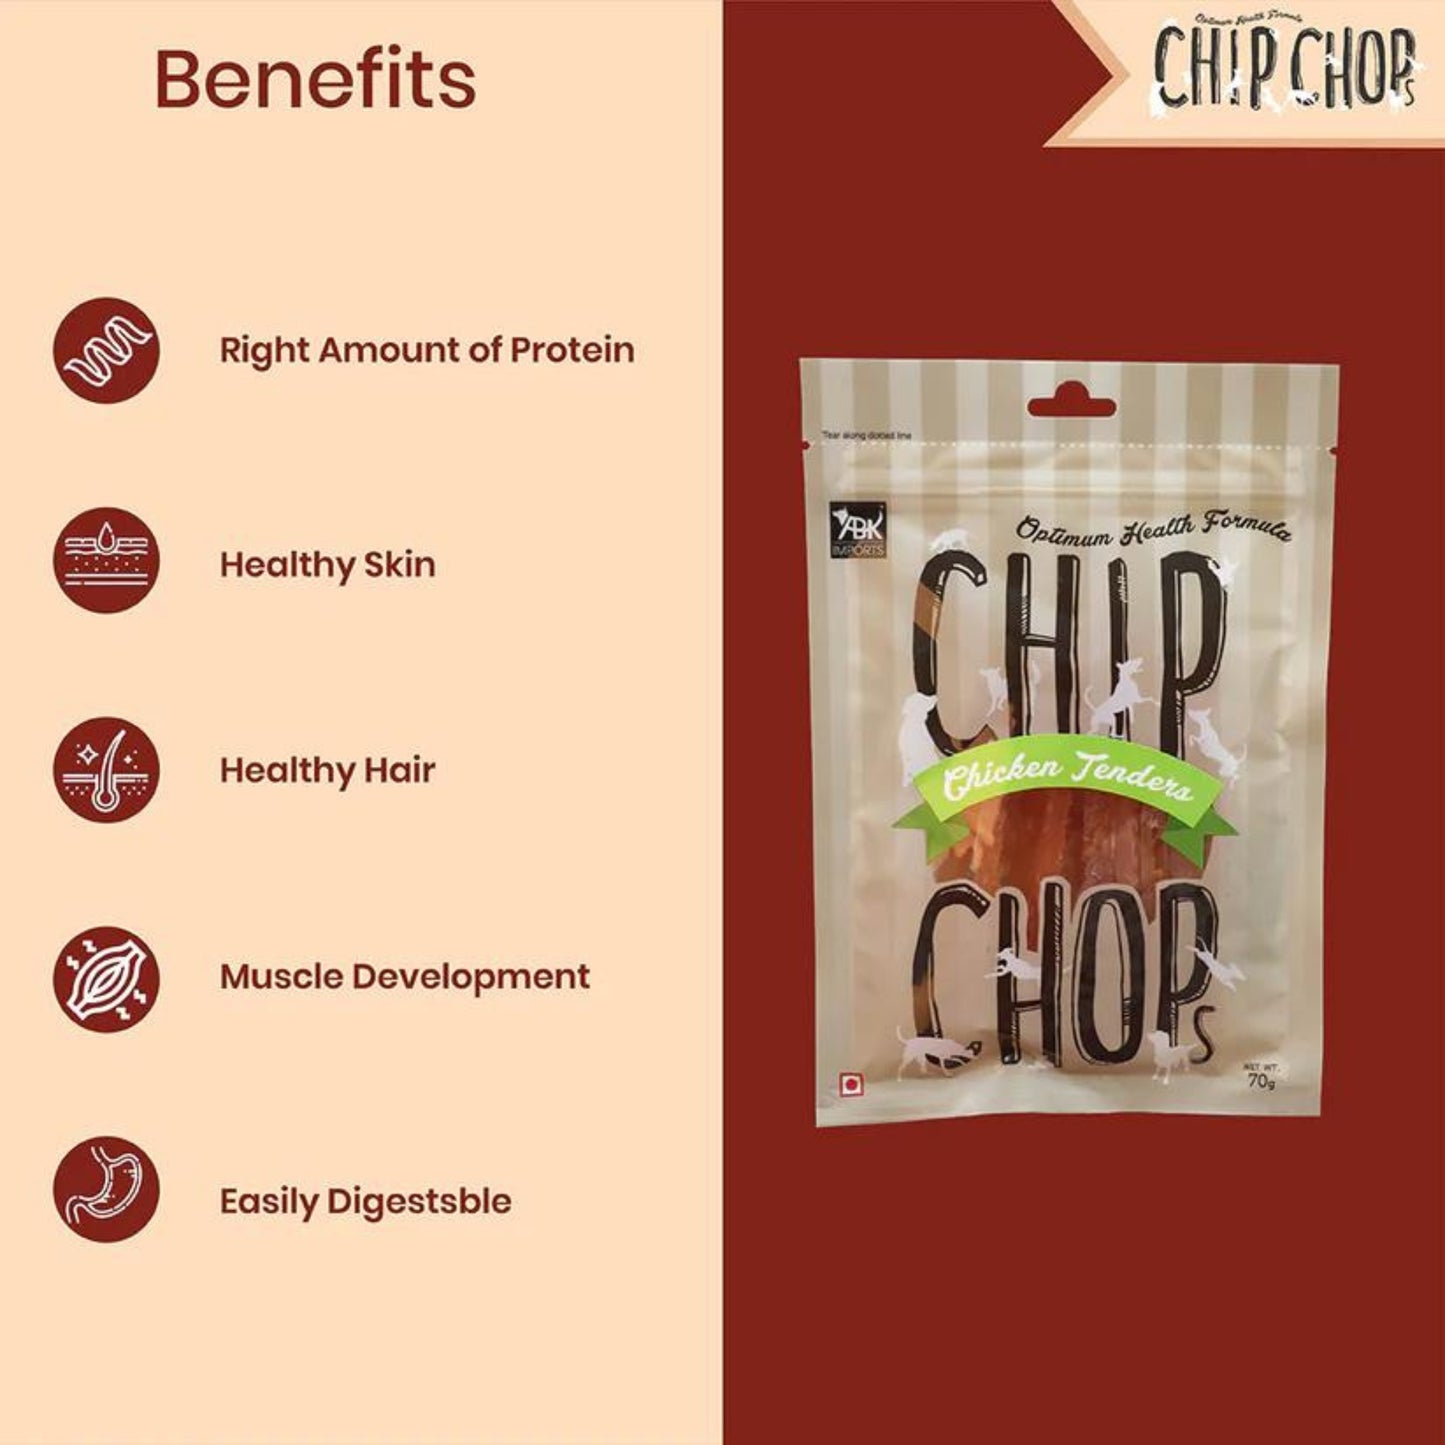 Chip Chops Dog Treats - Chicken Tenders (70gm)